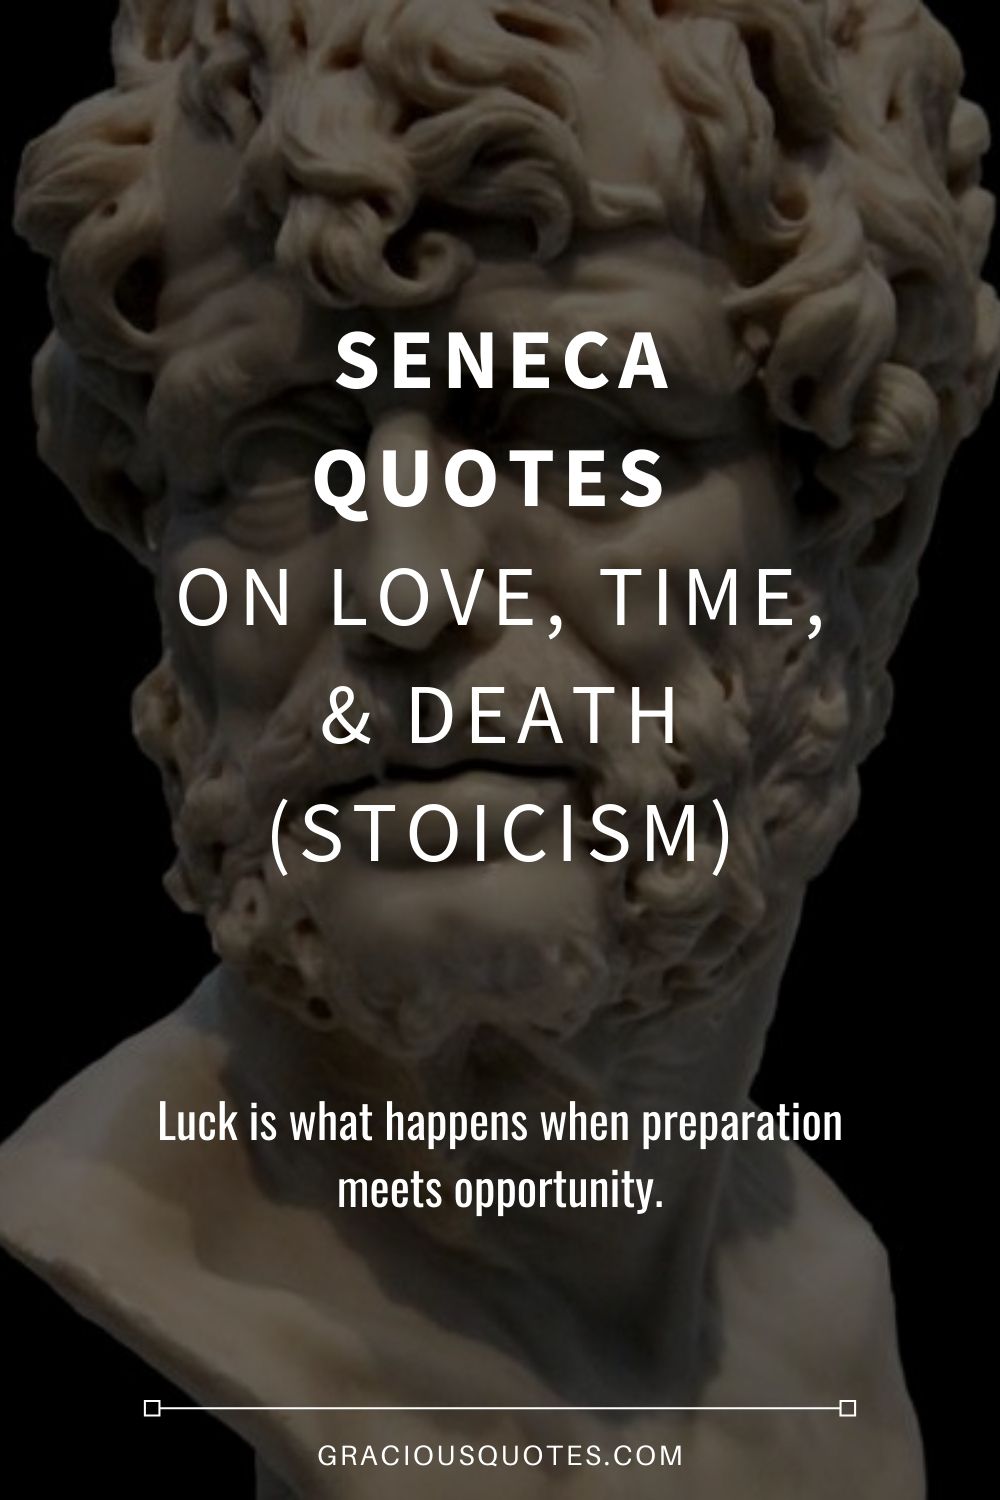 Seneca Quotes on Love, Time, & Death (STOICISM) - Gracious Quotes